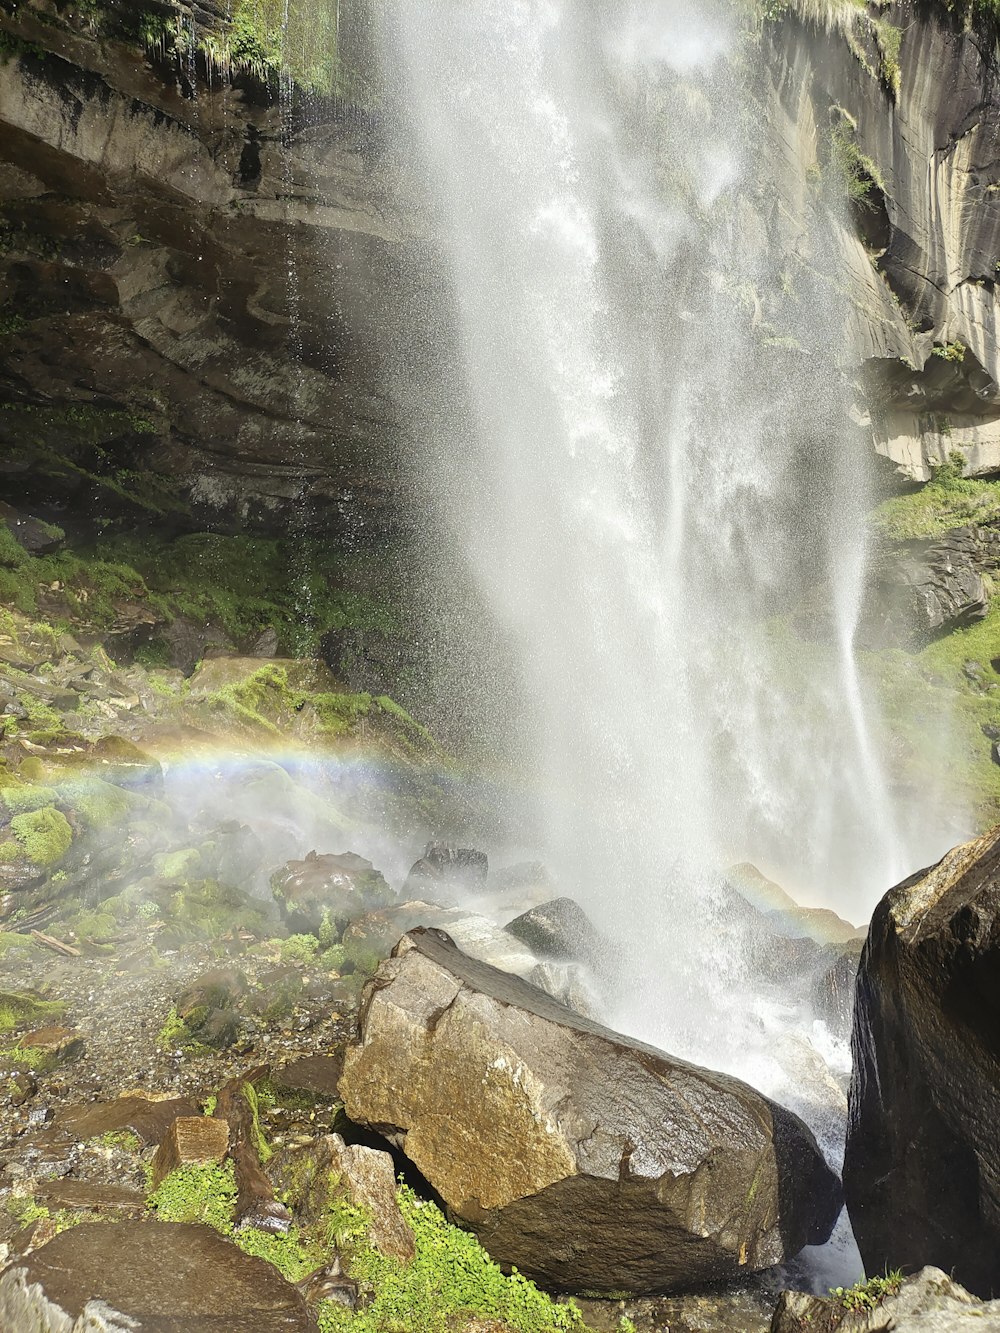 una cascata con un arcobaleno al centro